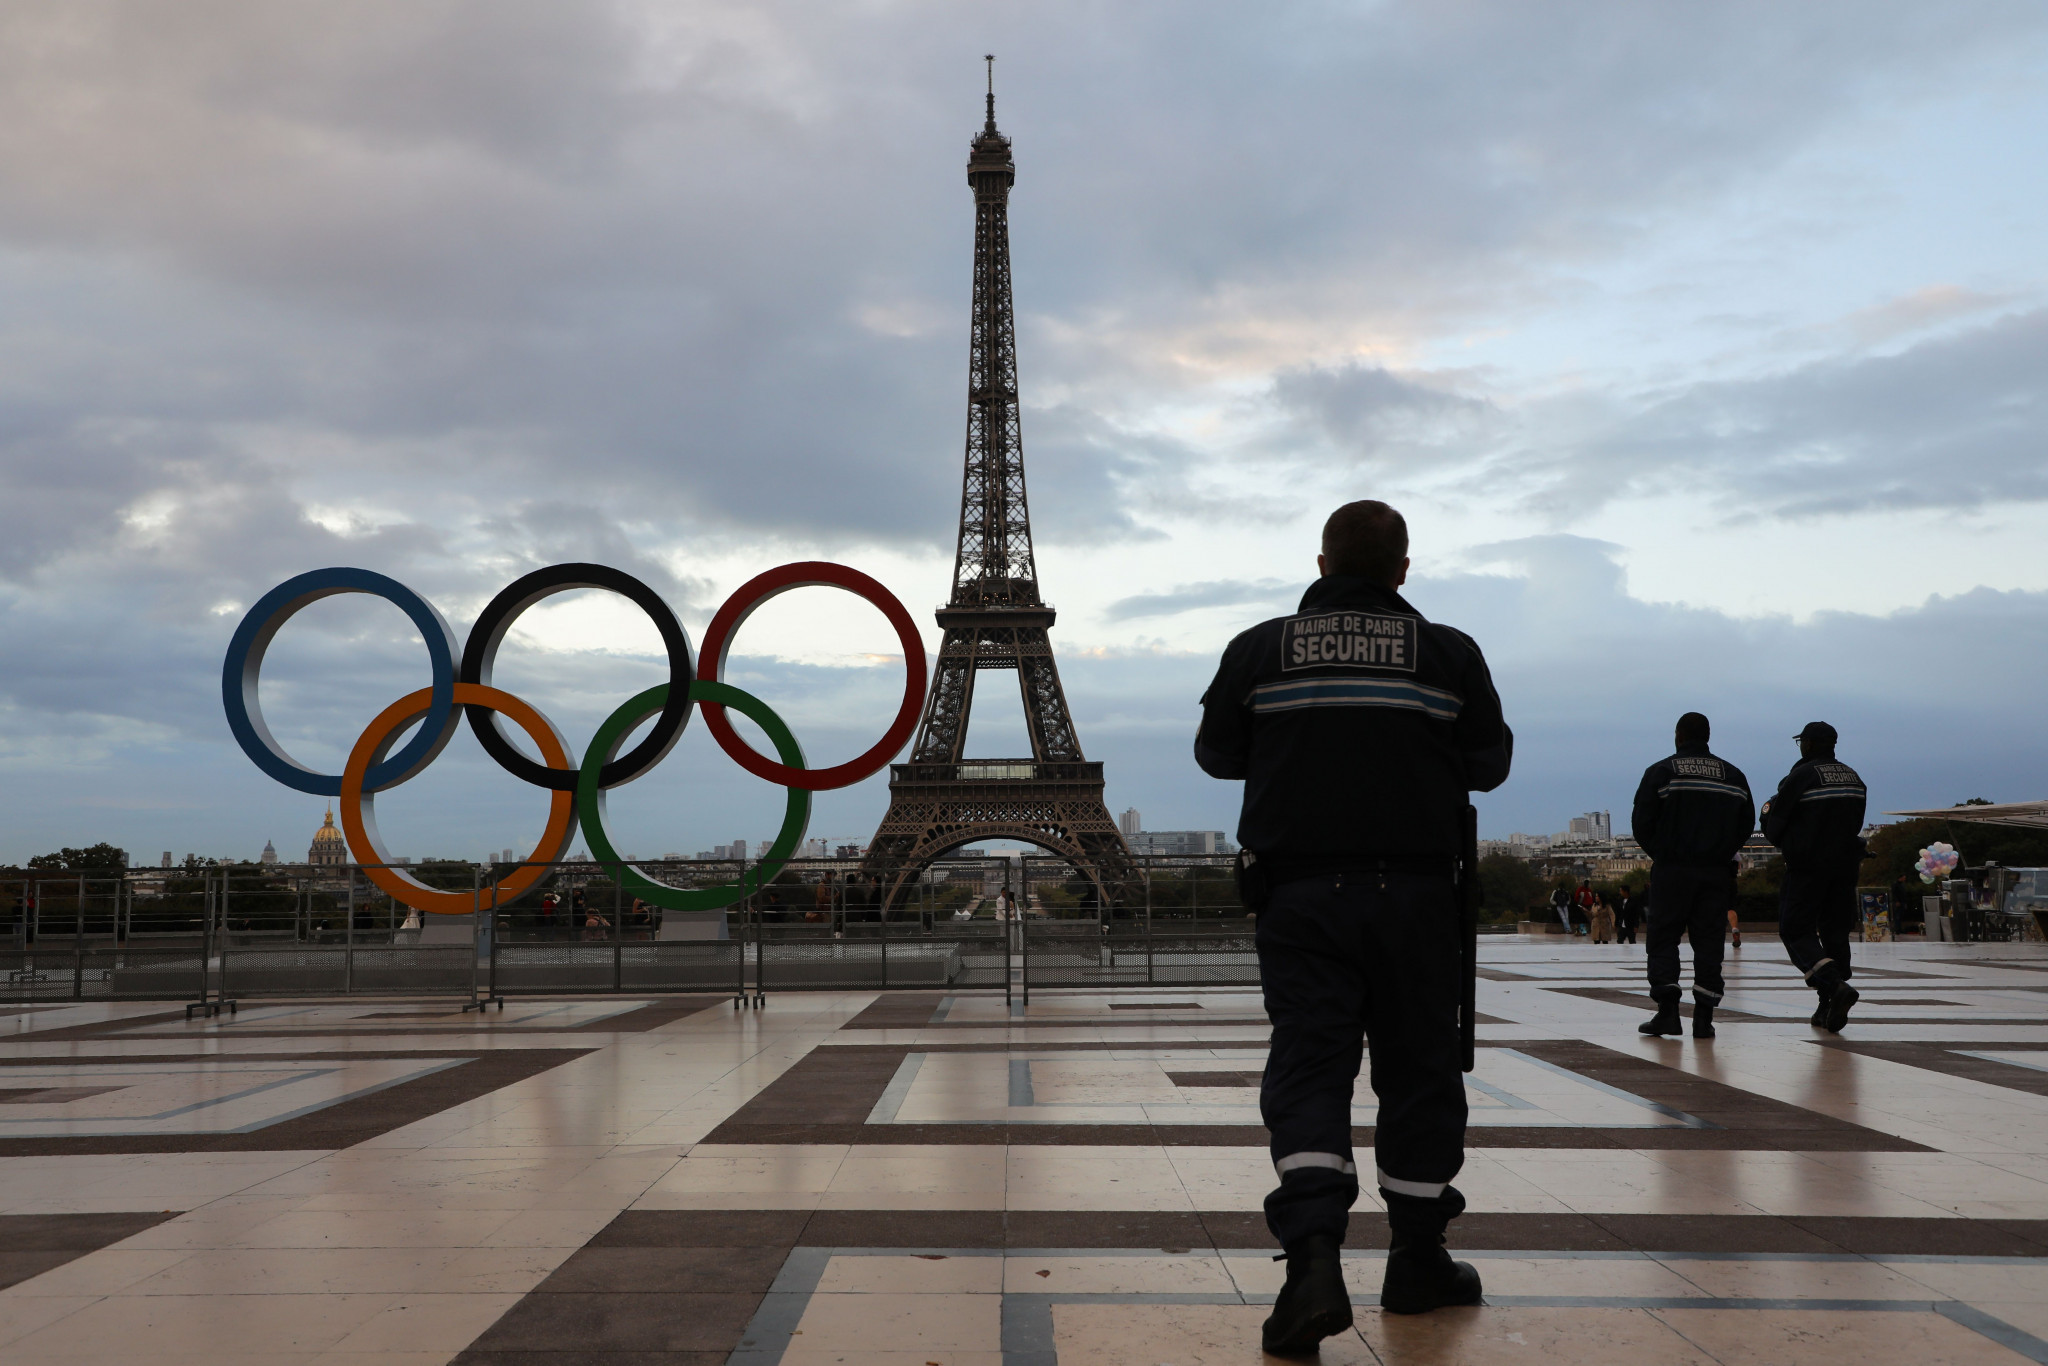 Kenya set to name management team for Paris 2024 Olympics next week